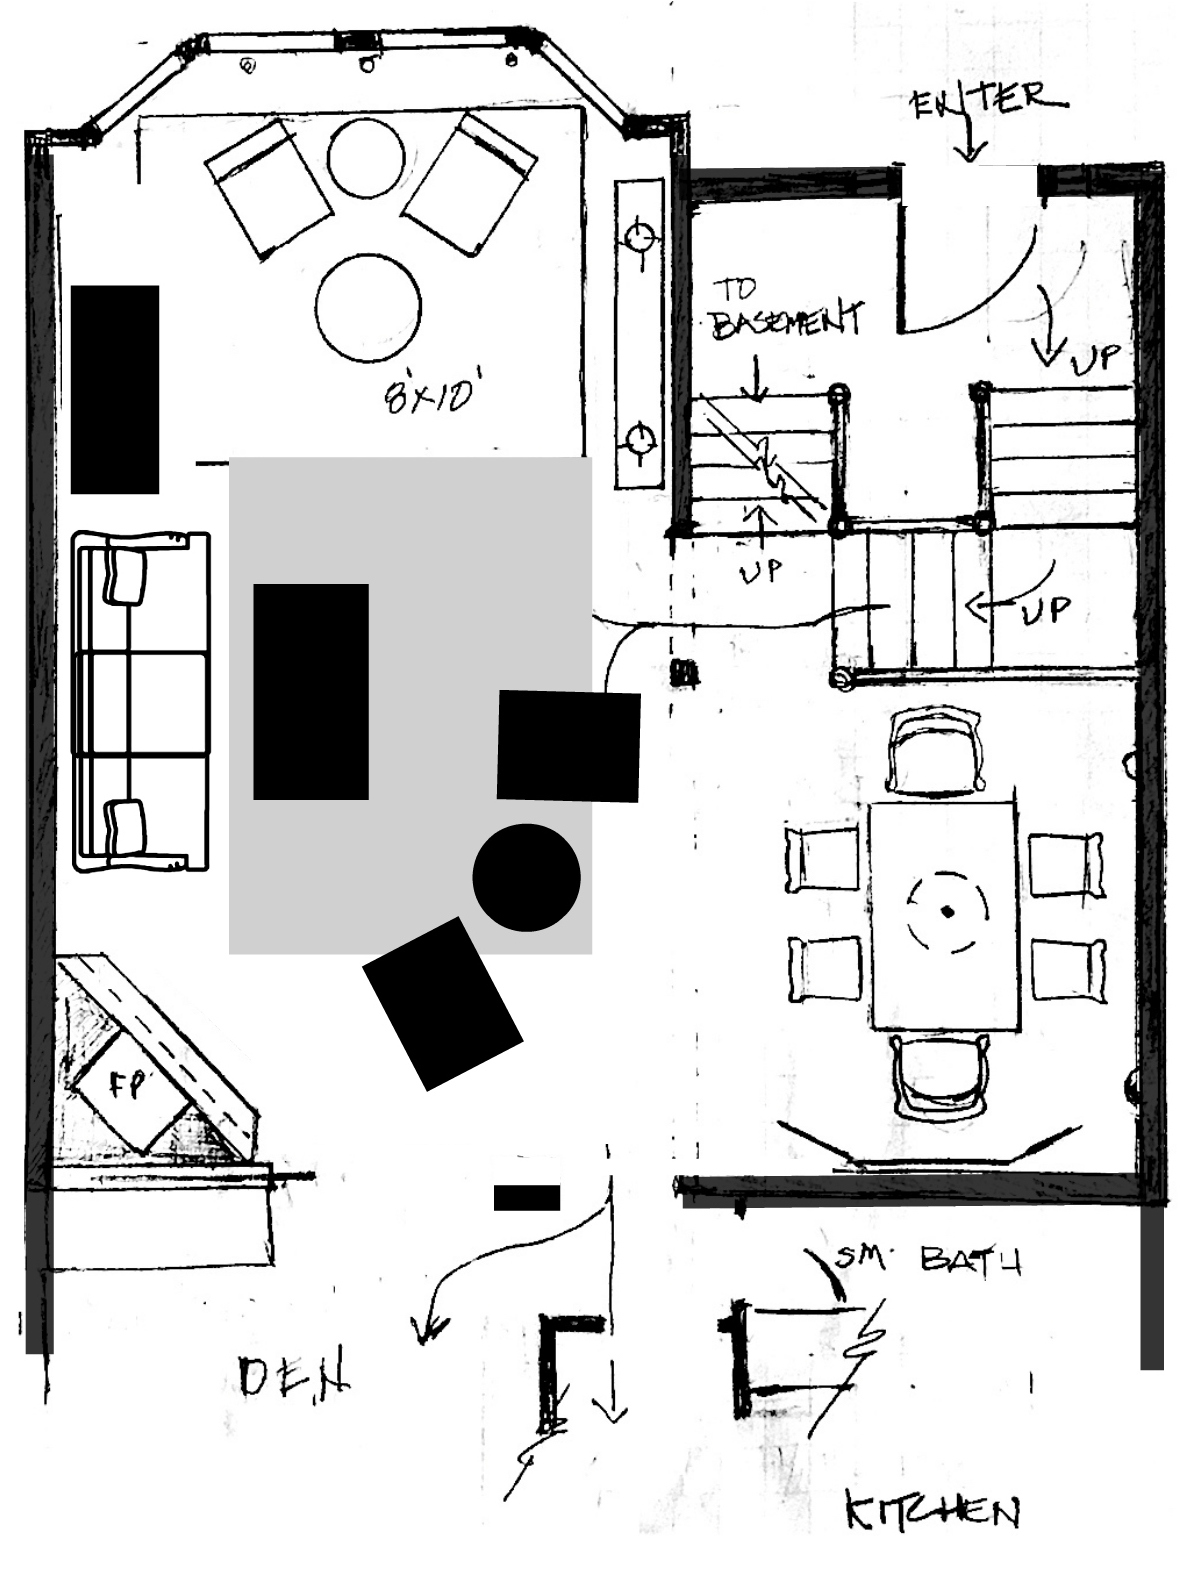 Townhouse LIVING ROOM floor plan idea